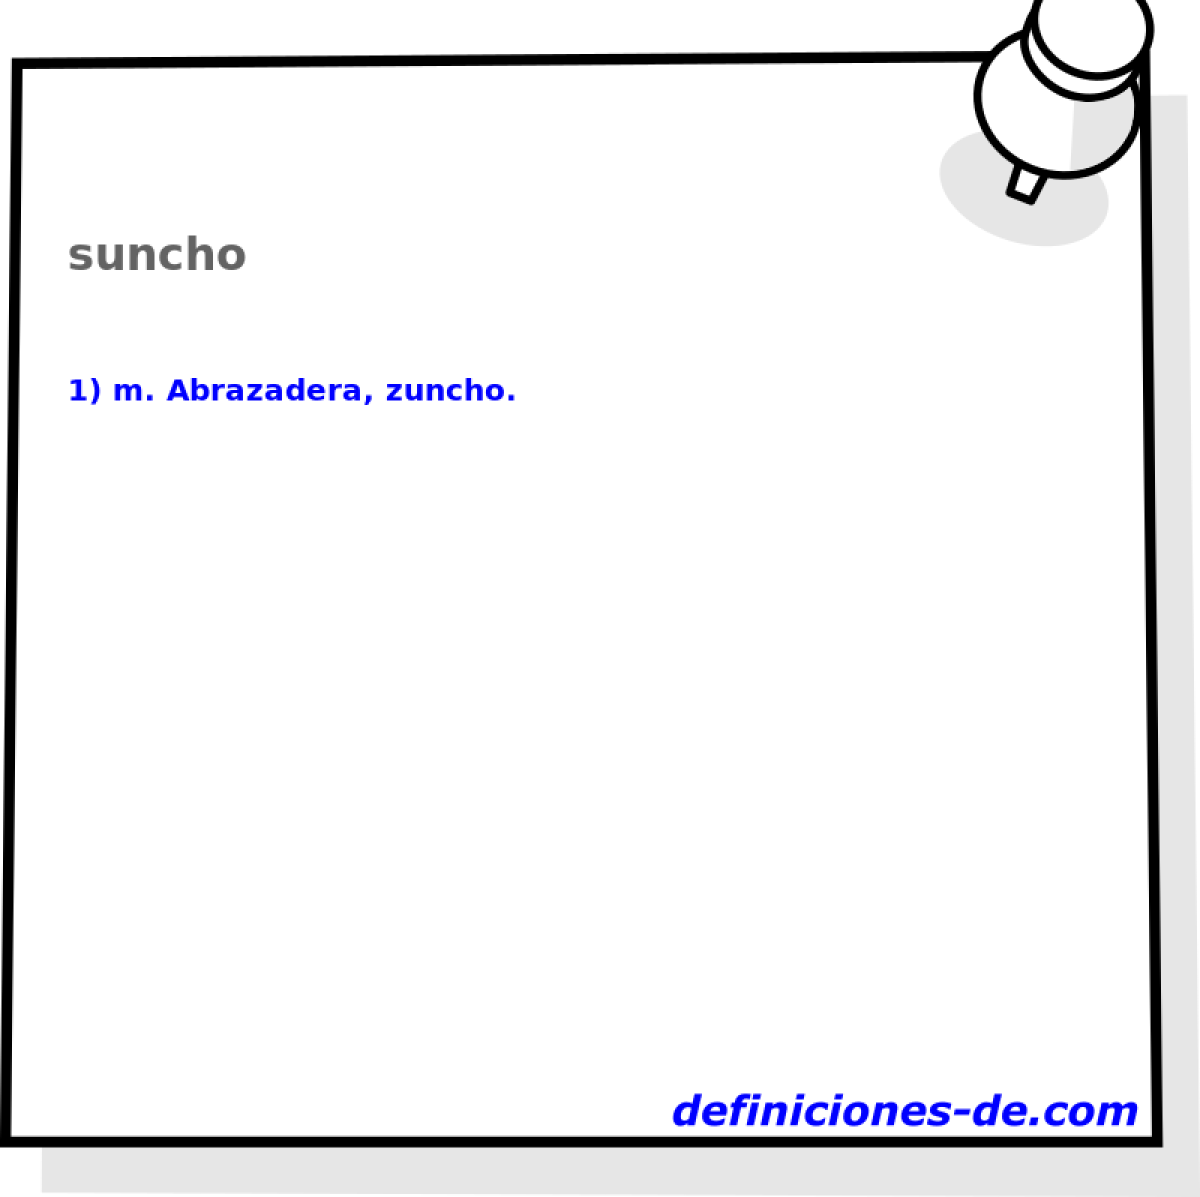 suncho 